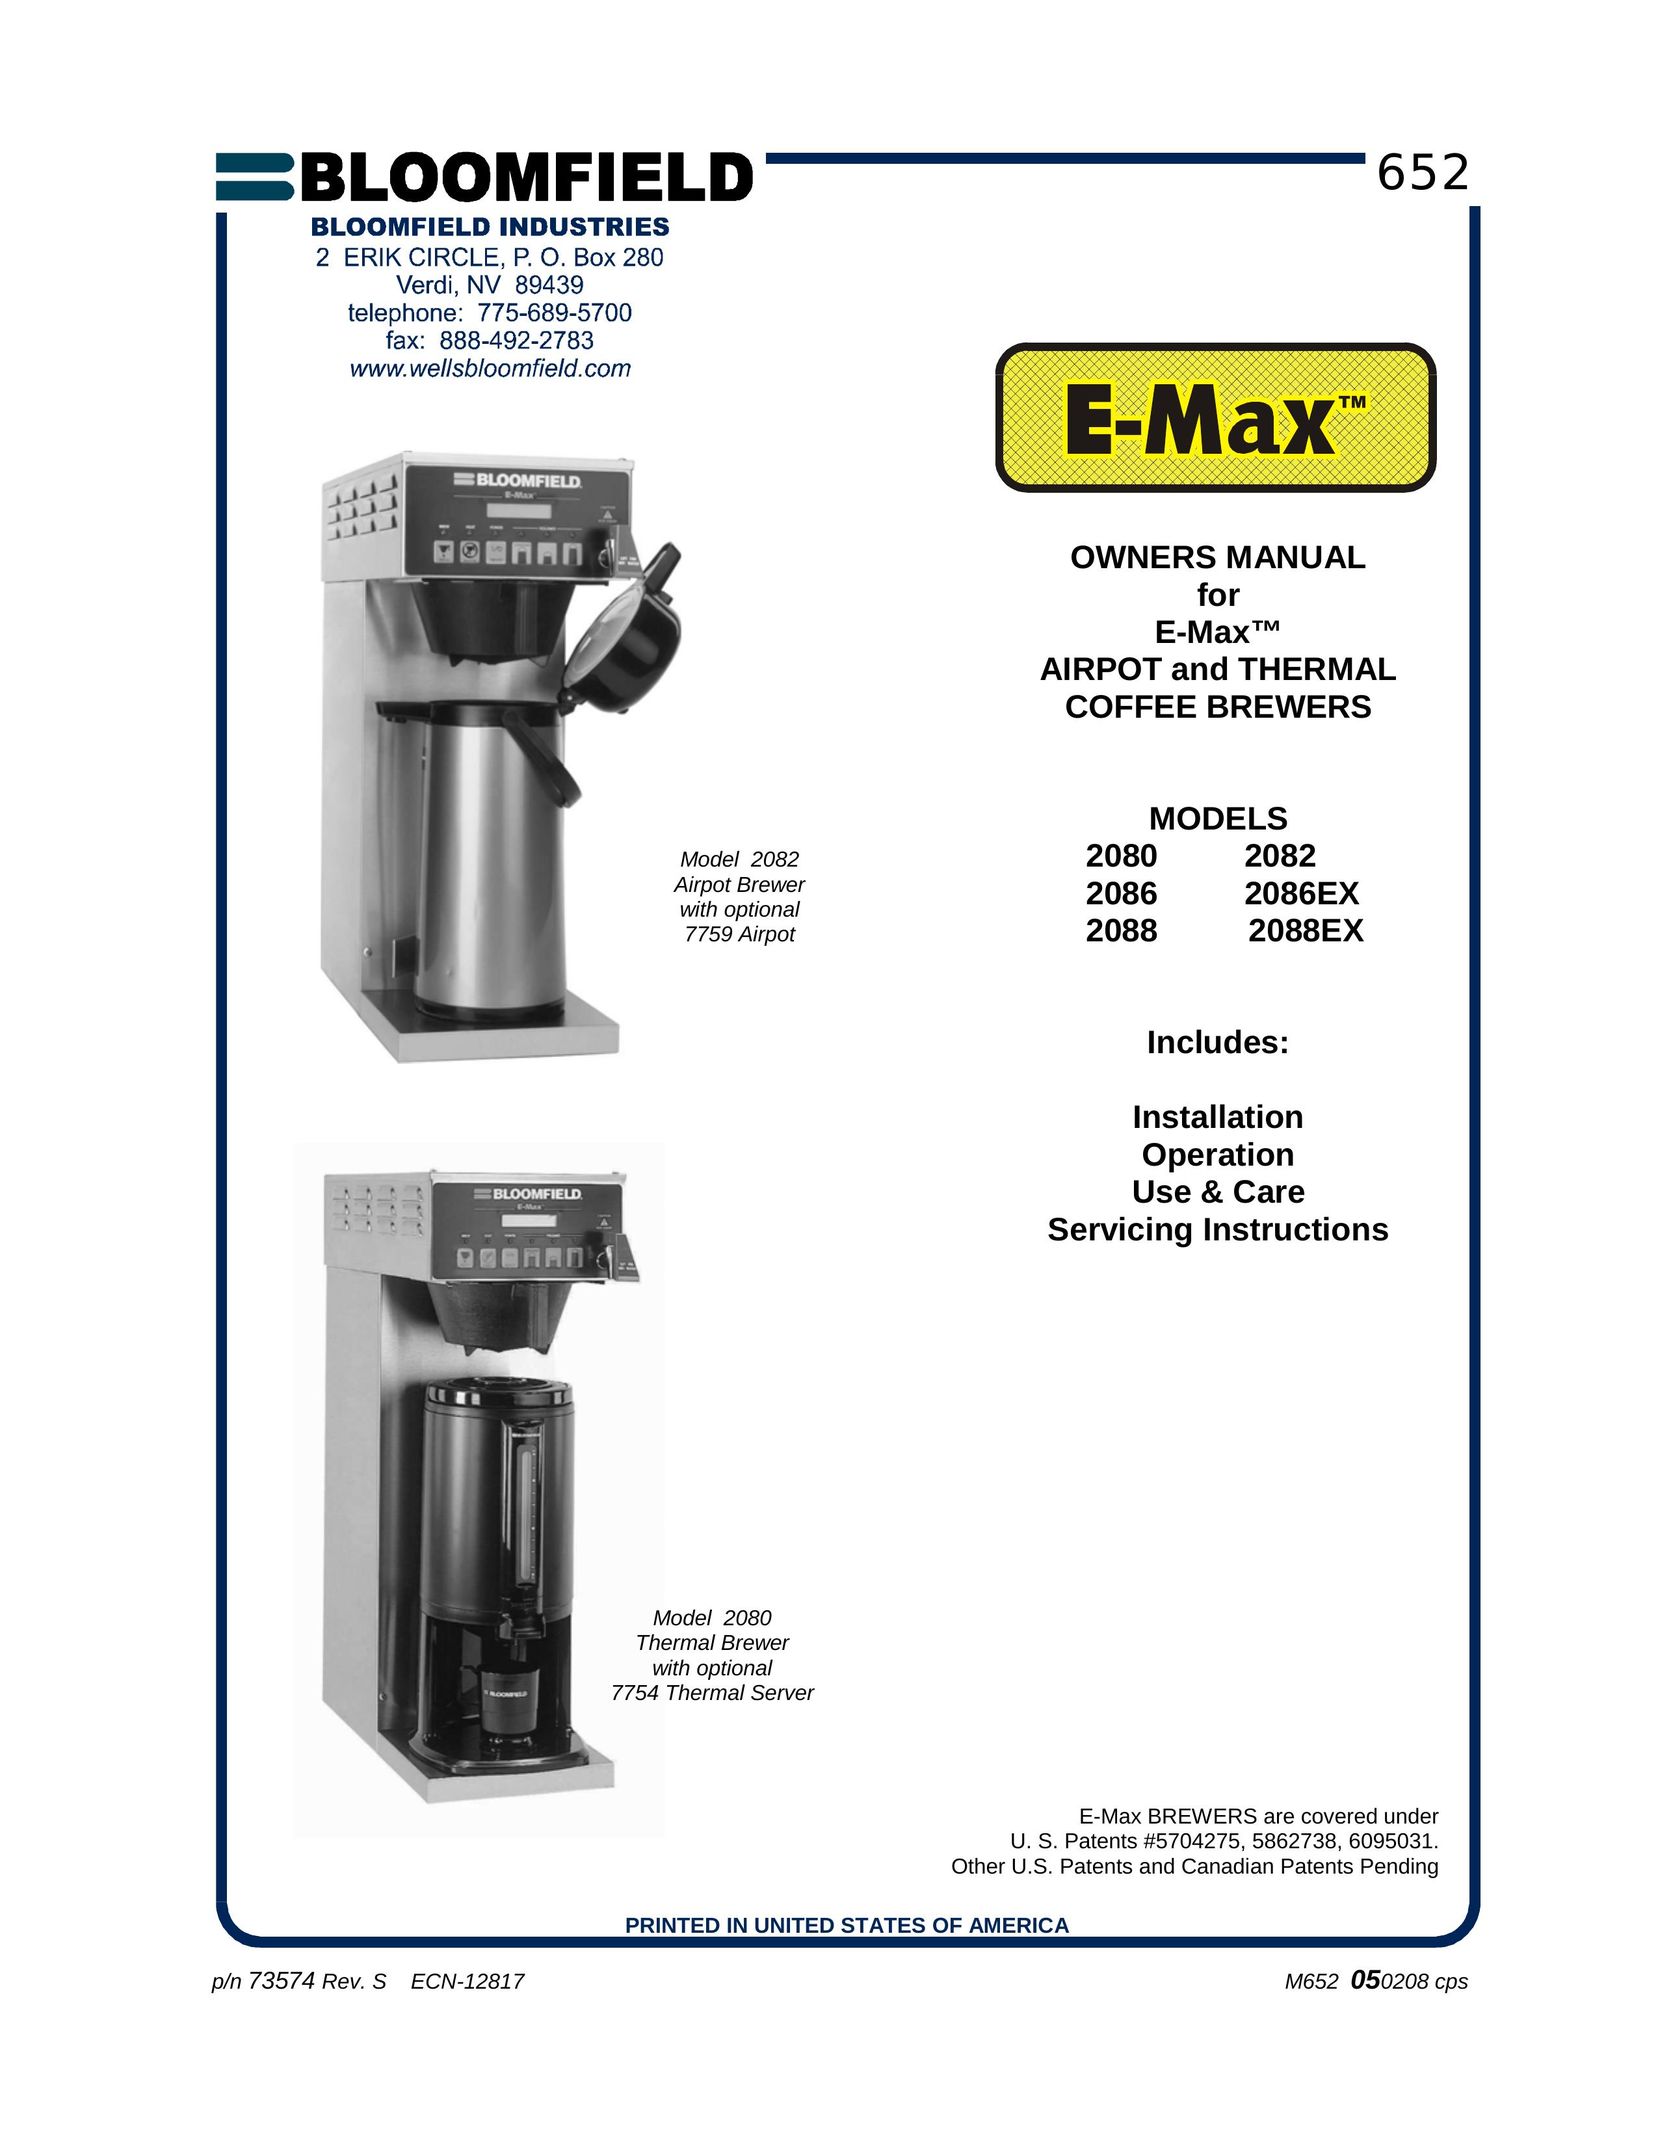 Bloomfield 2086EX Coffeemaker User Manual